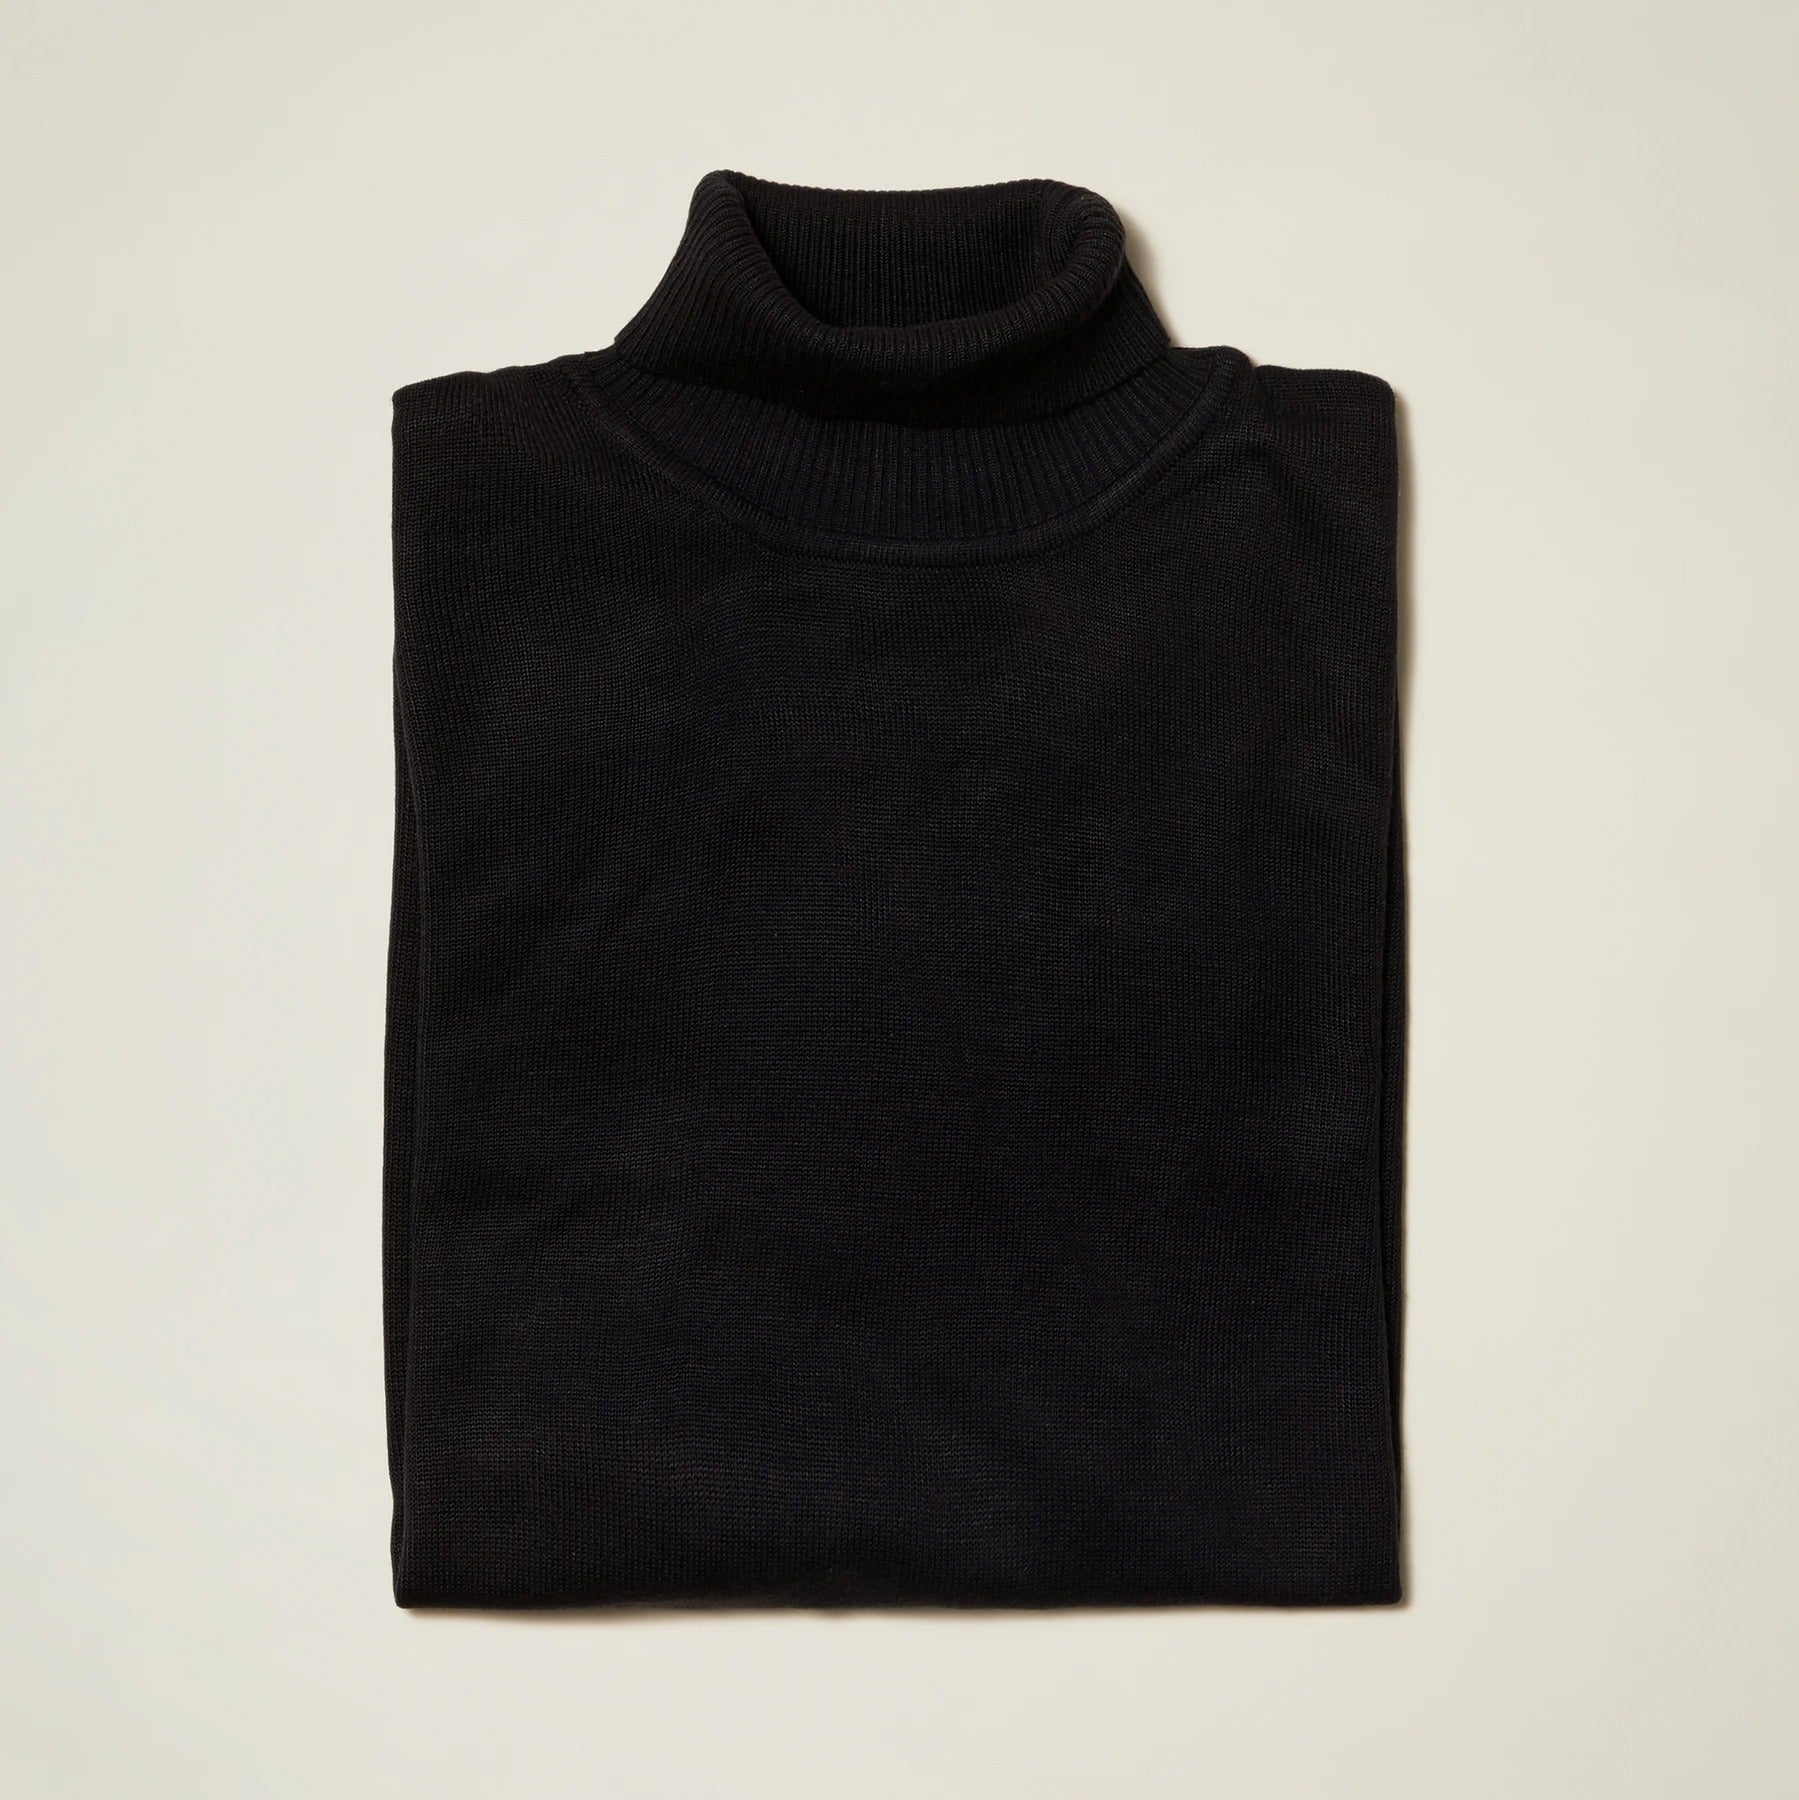 Inserch Cotton Blend Turtleneck Sweater Black 4708